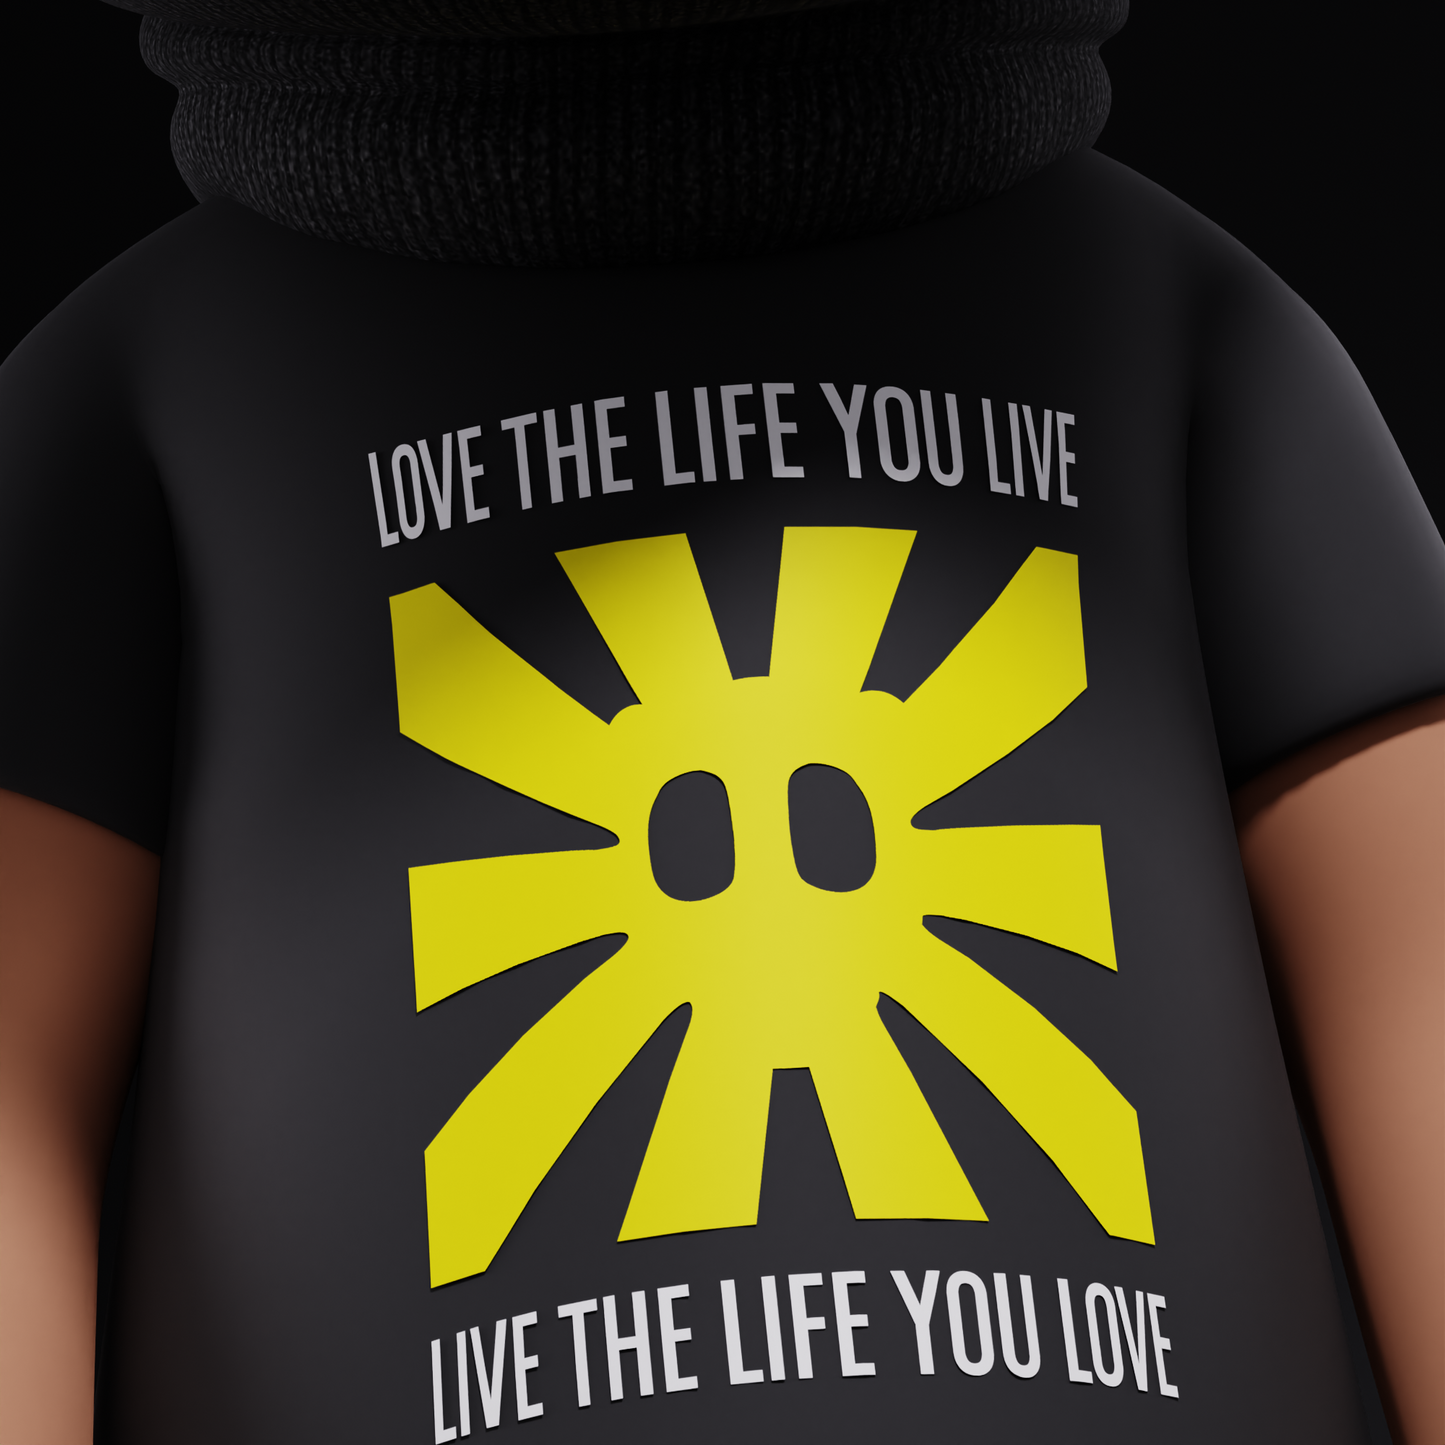 BeastBasics "LIVE/LOVE life" Black T-Shirt (Digital Download)